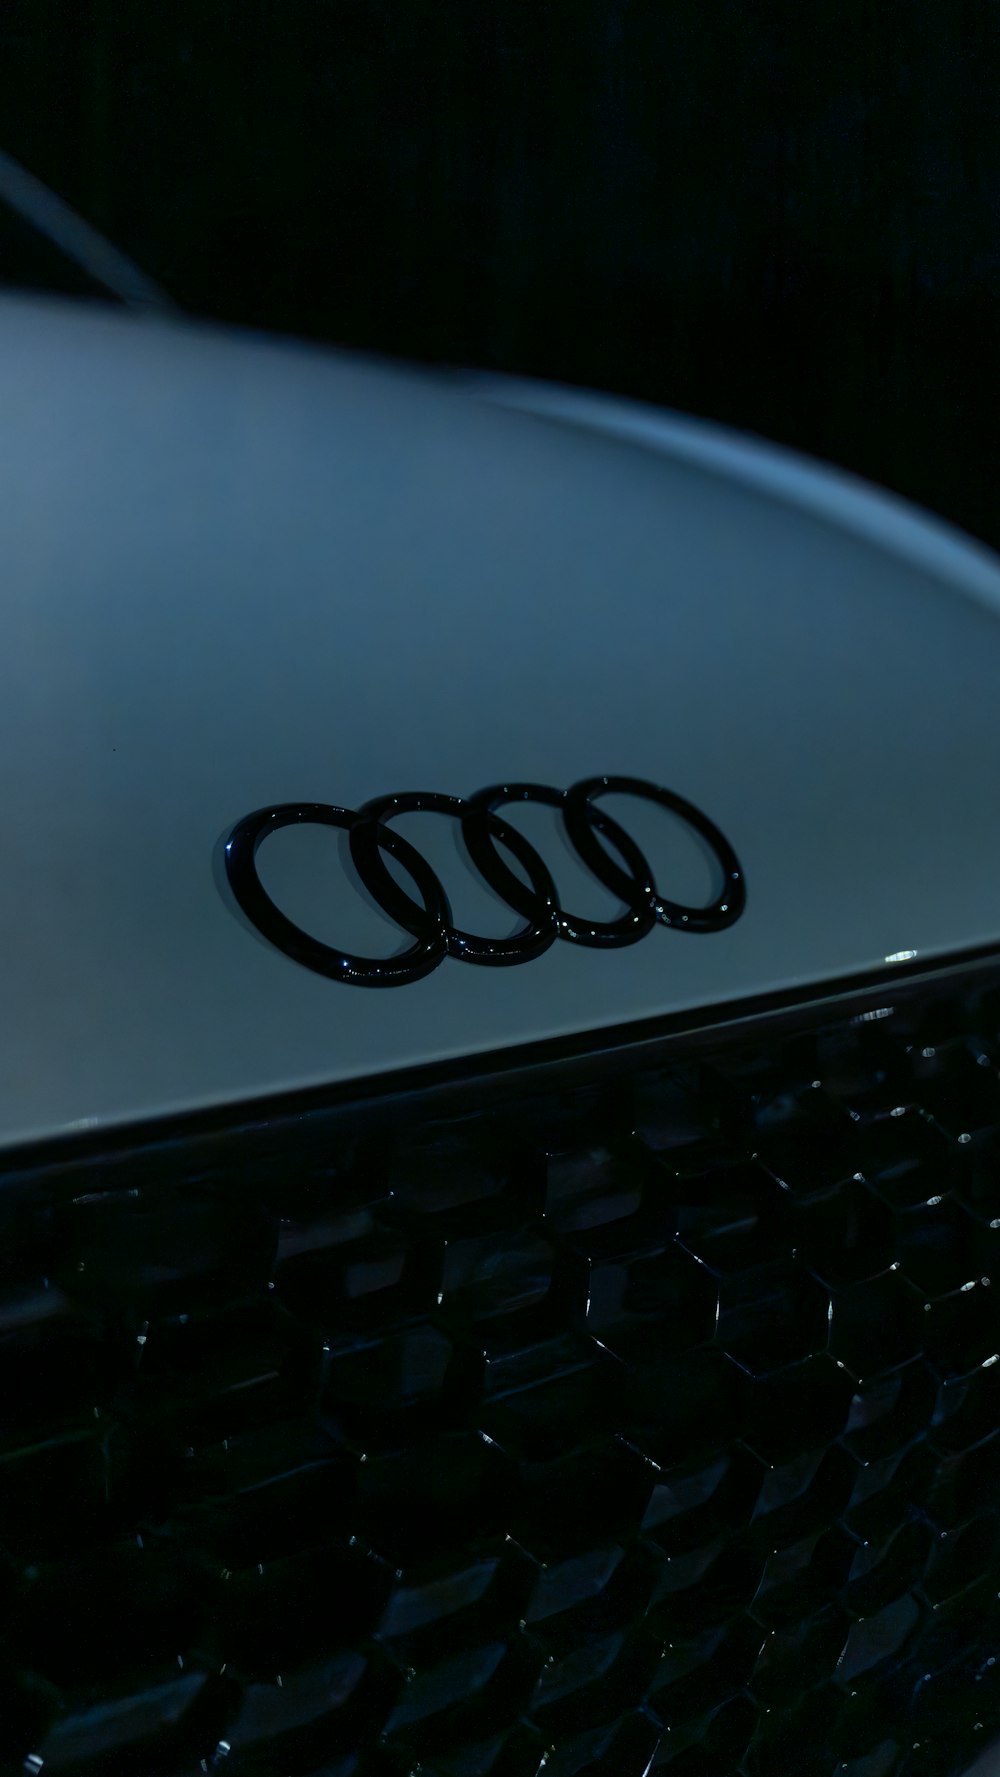 a close up of an audi emblem on a car